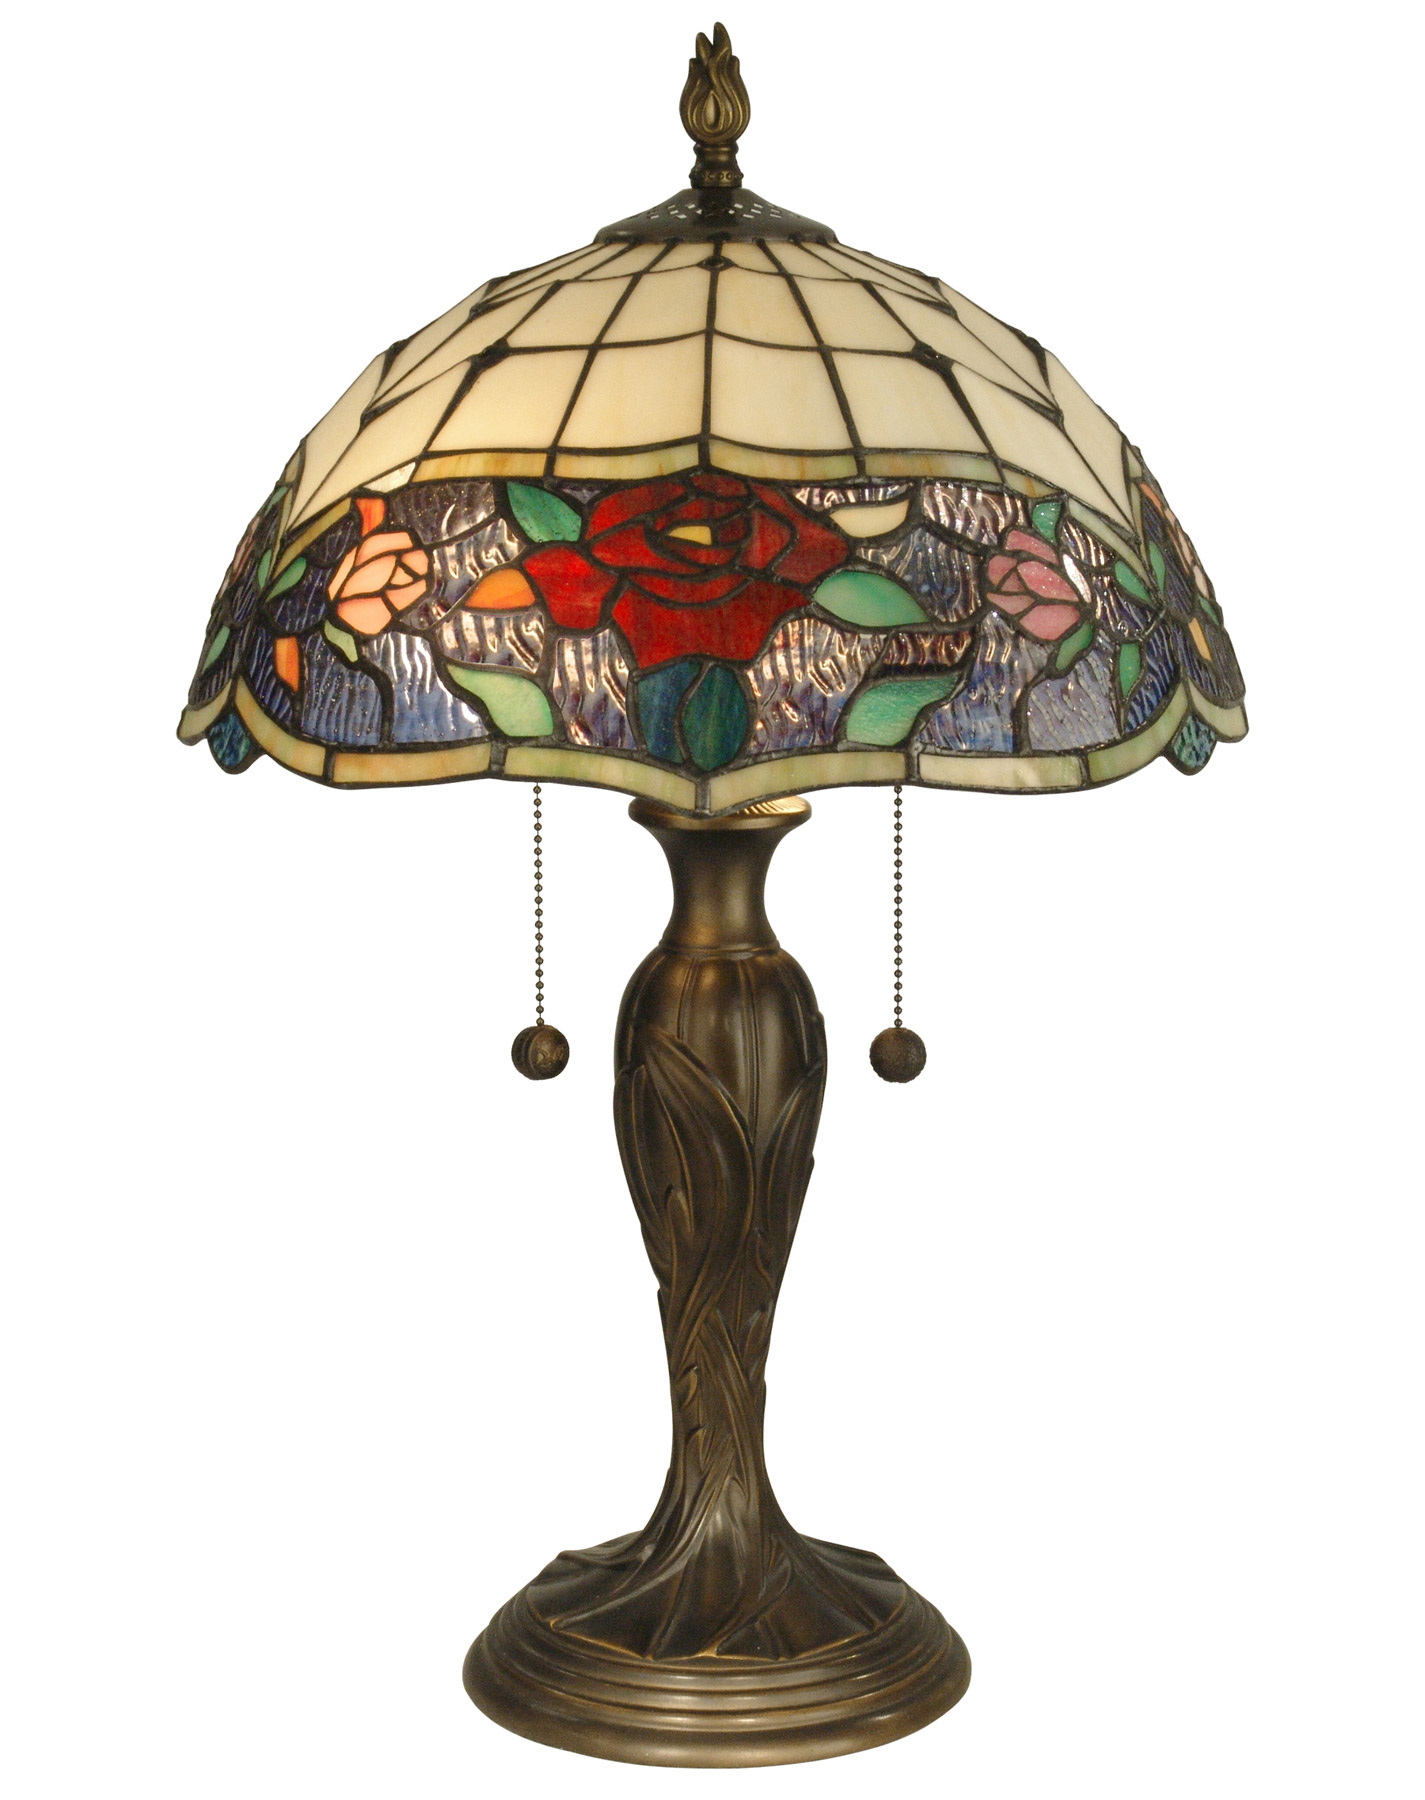 Dale Tiffany TT10211 Tiffany Malta Table Lamp